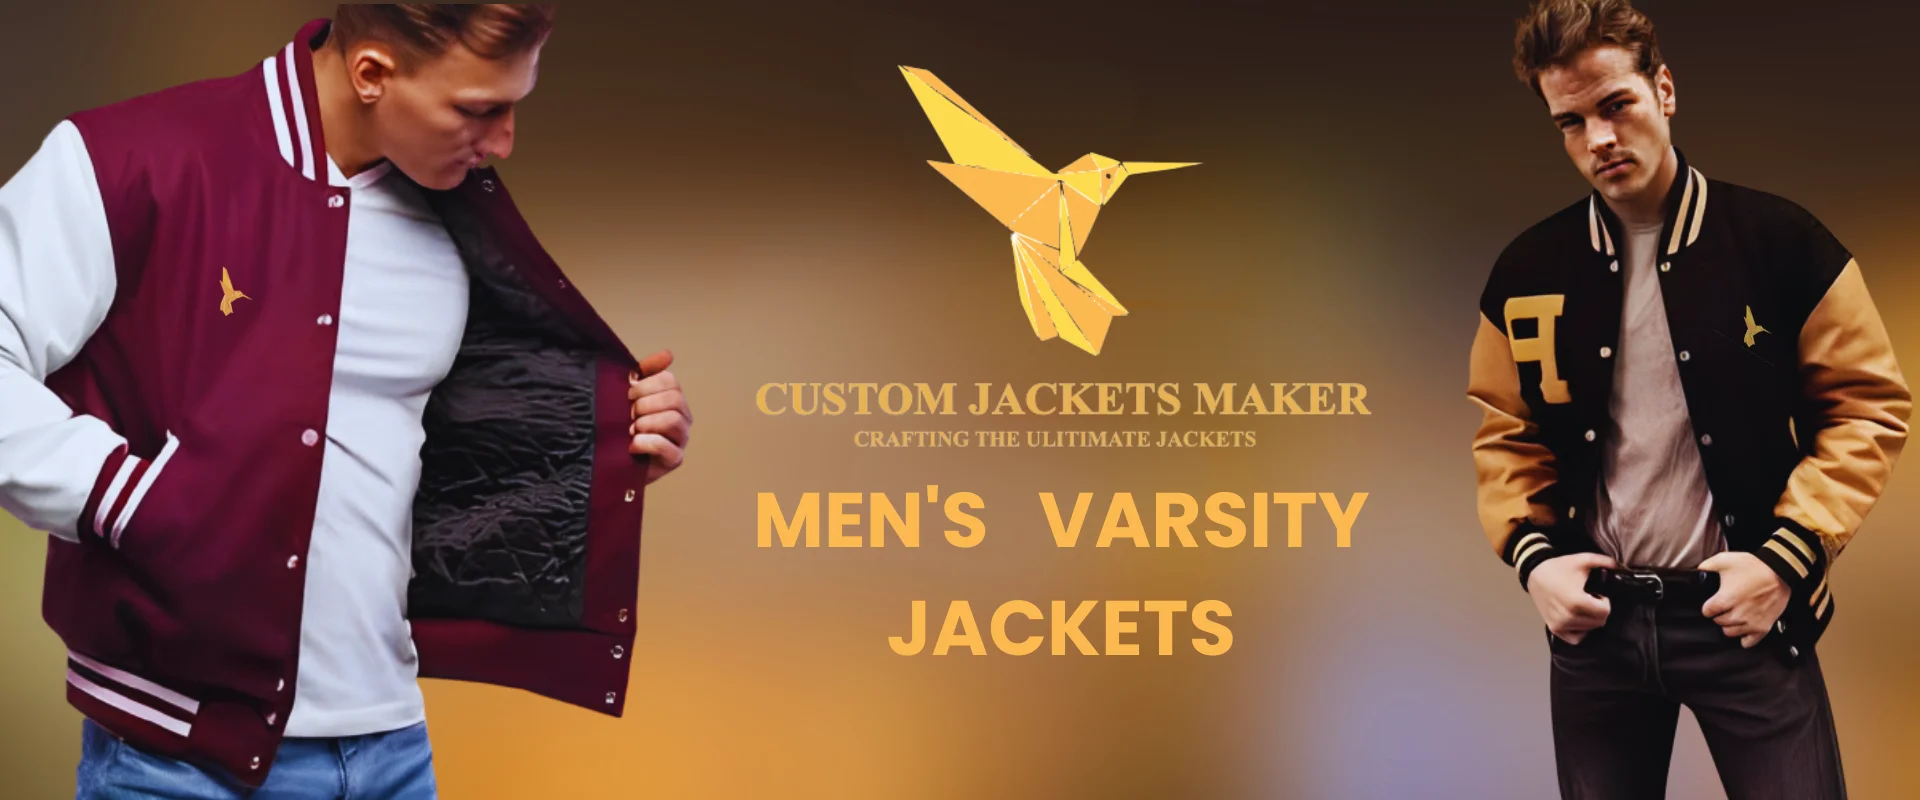 Banner Image of Men's Varsity jacket 